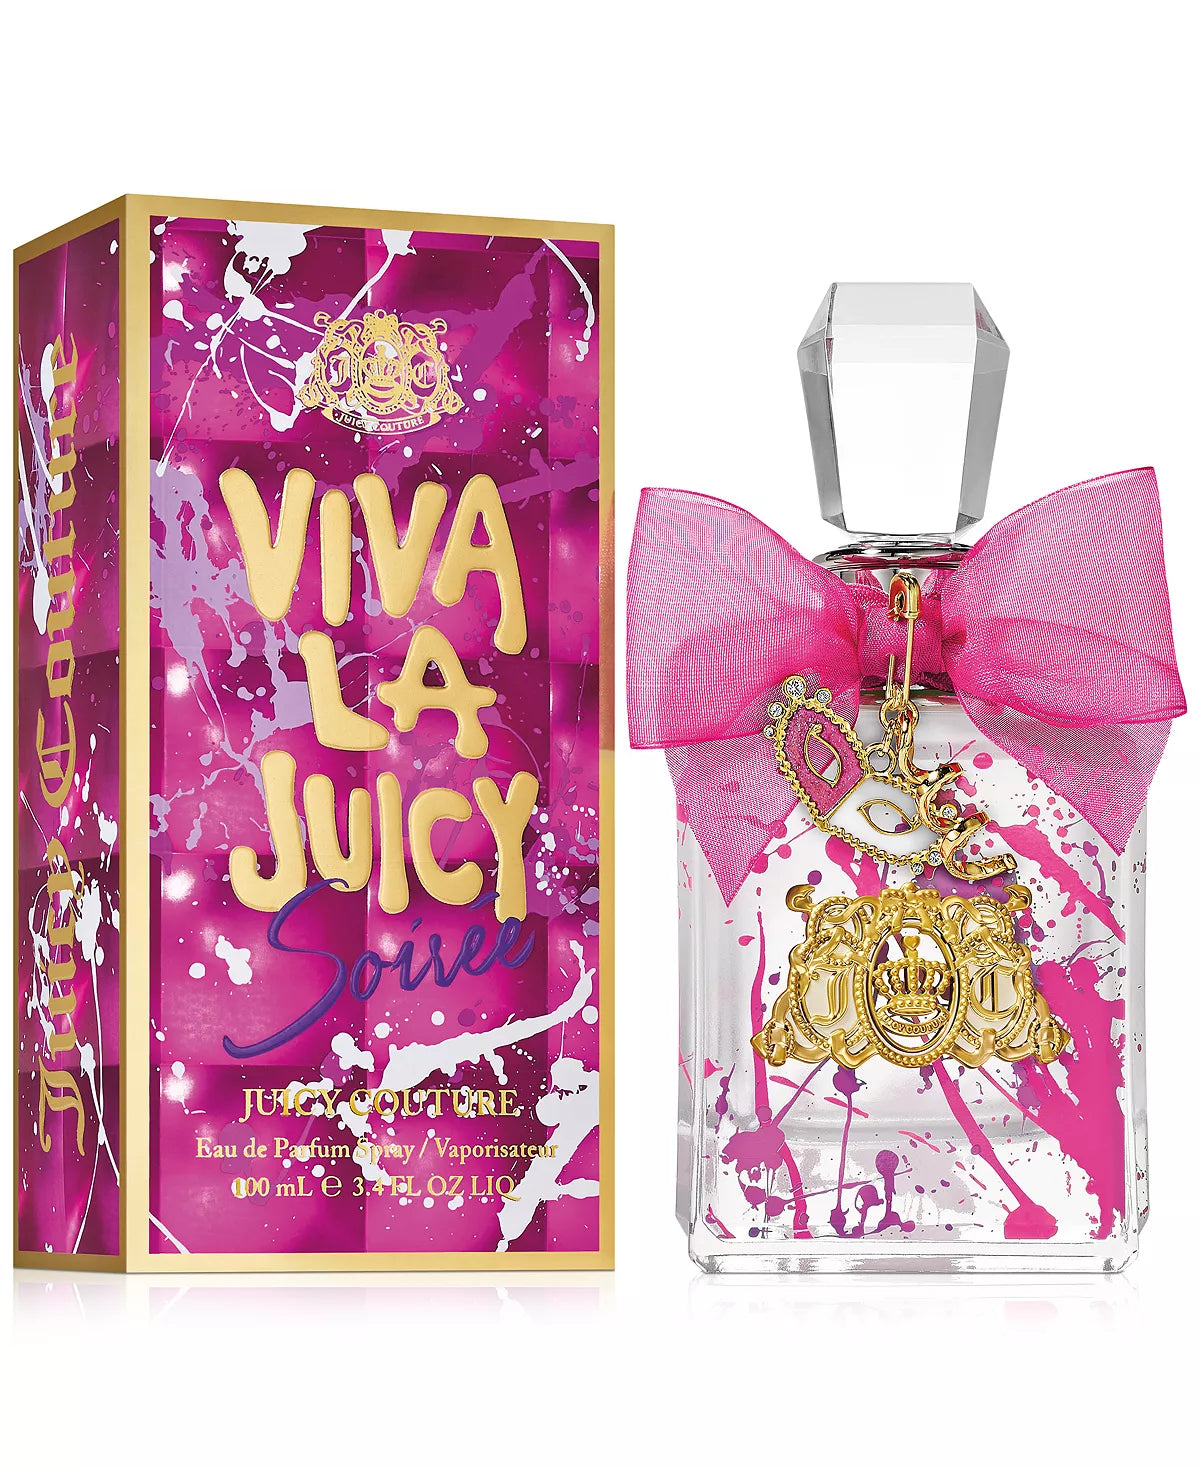 Viva La Juicy Soiree Eau de Parfum - Perfume Planet 